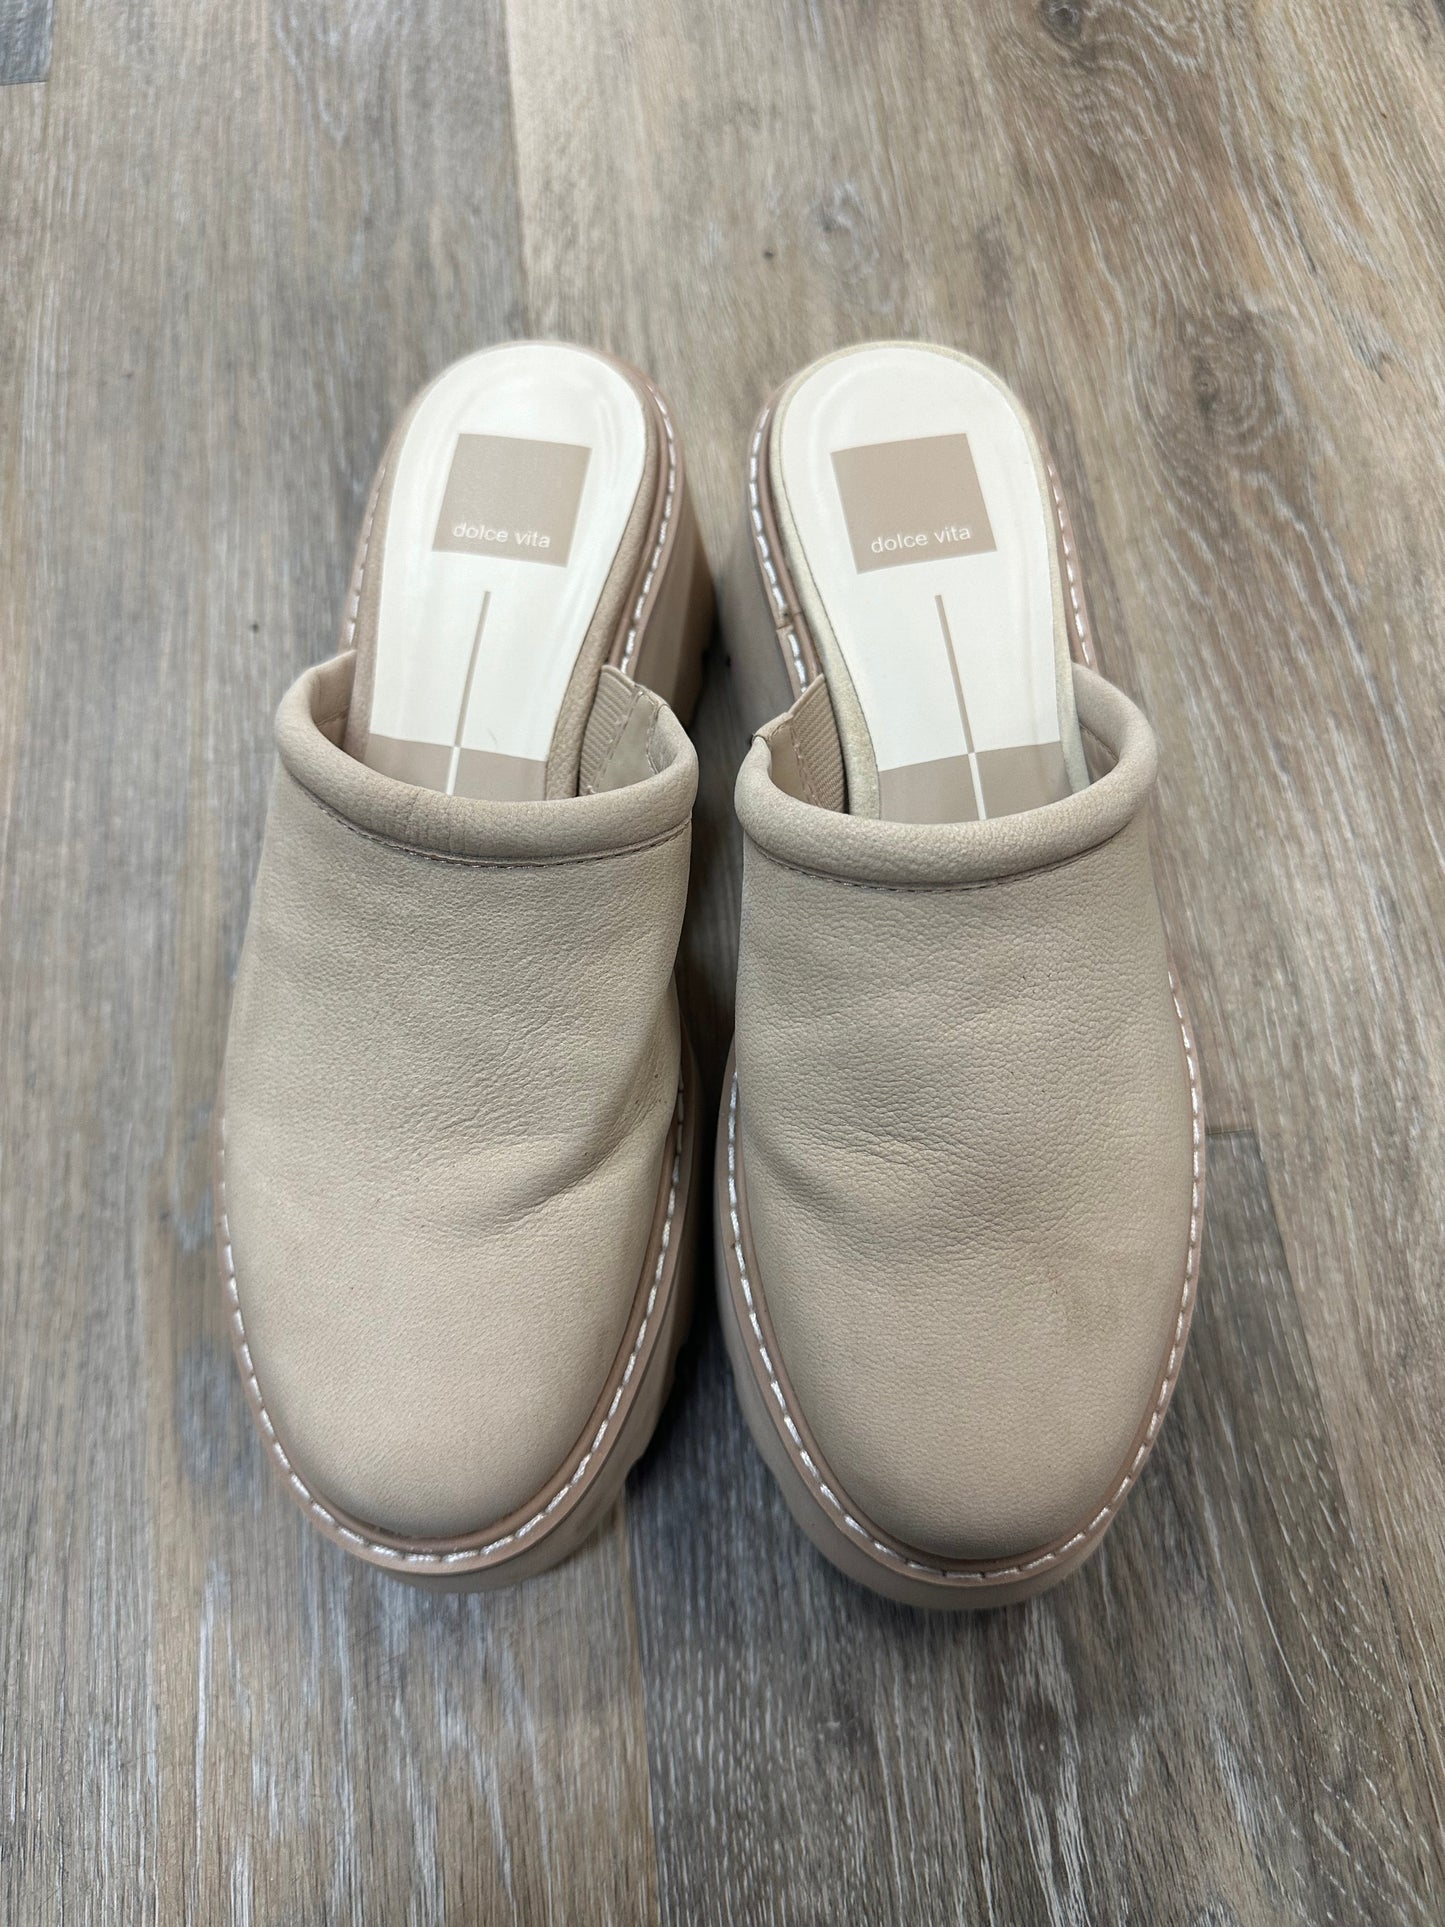 Tan Shoes Heels Platform Dolce Vita, Size 7.5